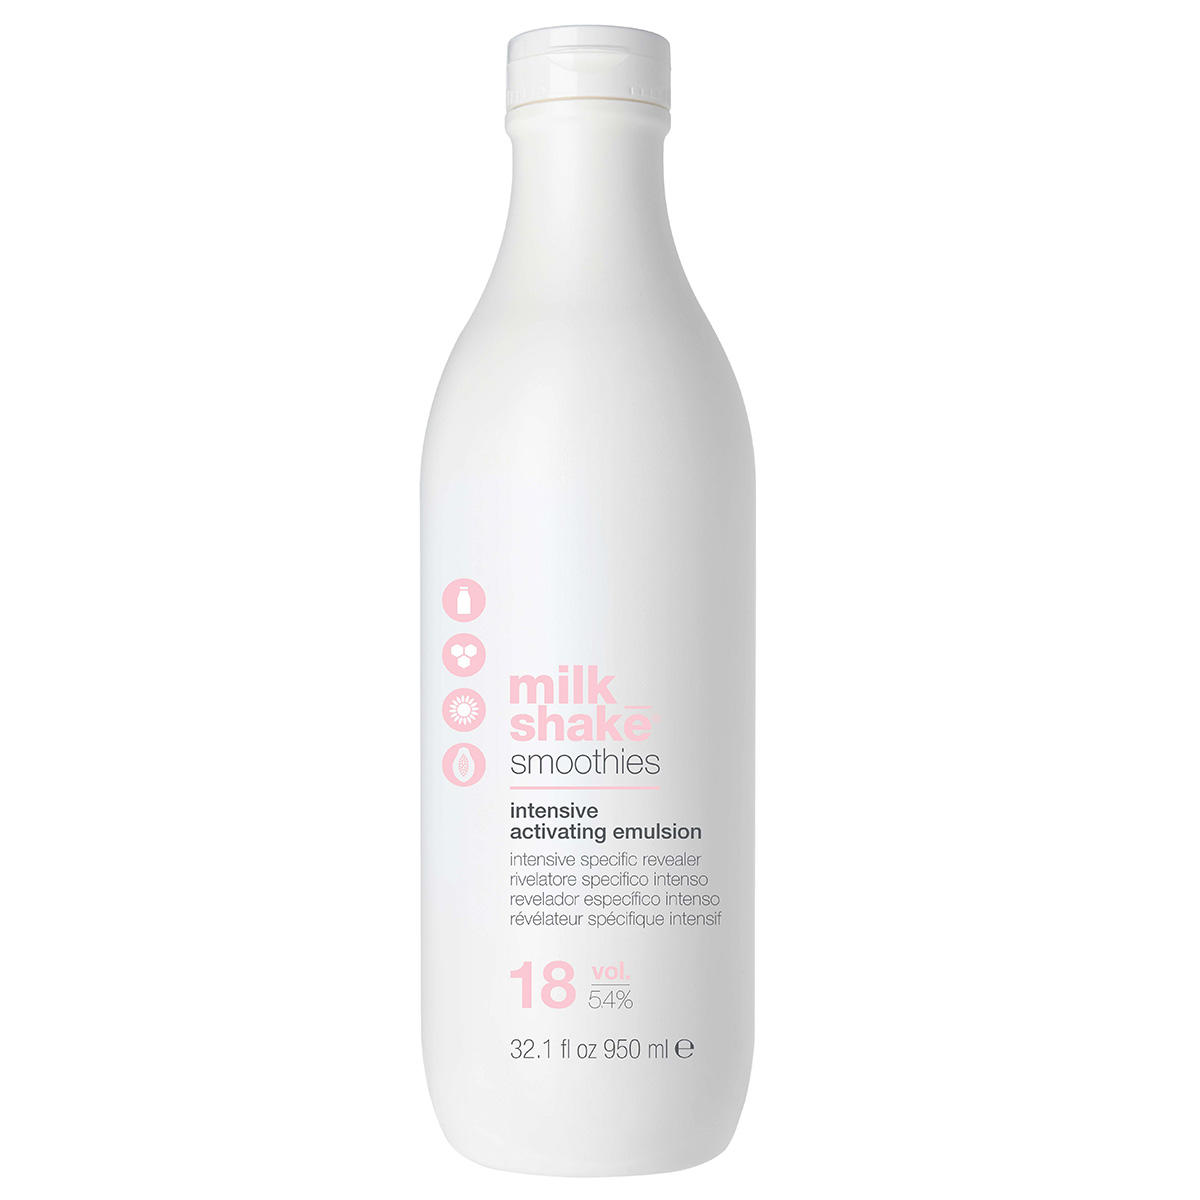 milk_shake Smoothies Intensive Activating Emulsion 18 Vol. - 54 % 950 ml - 1